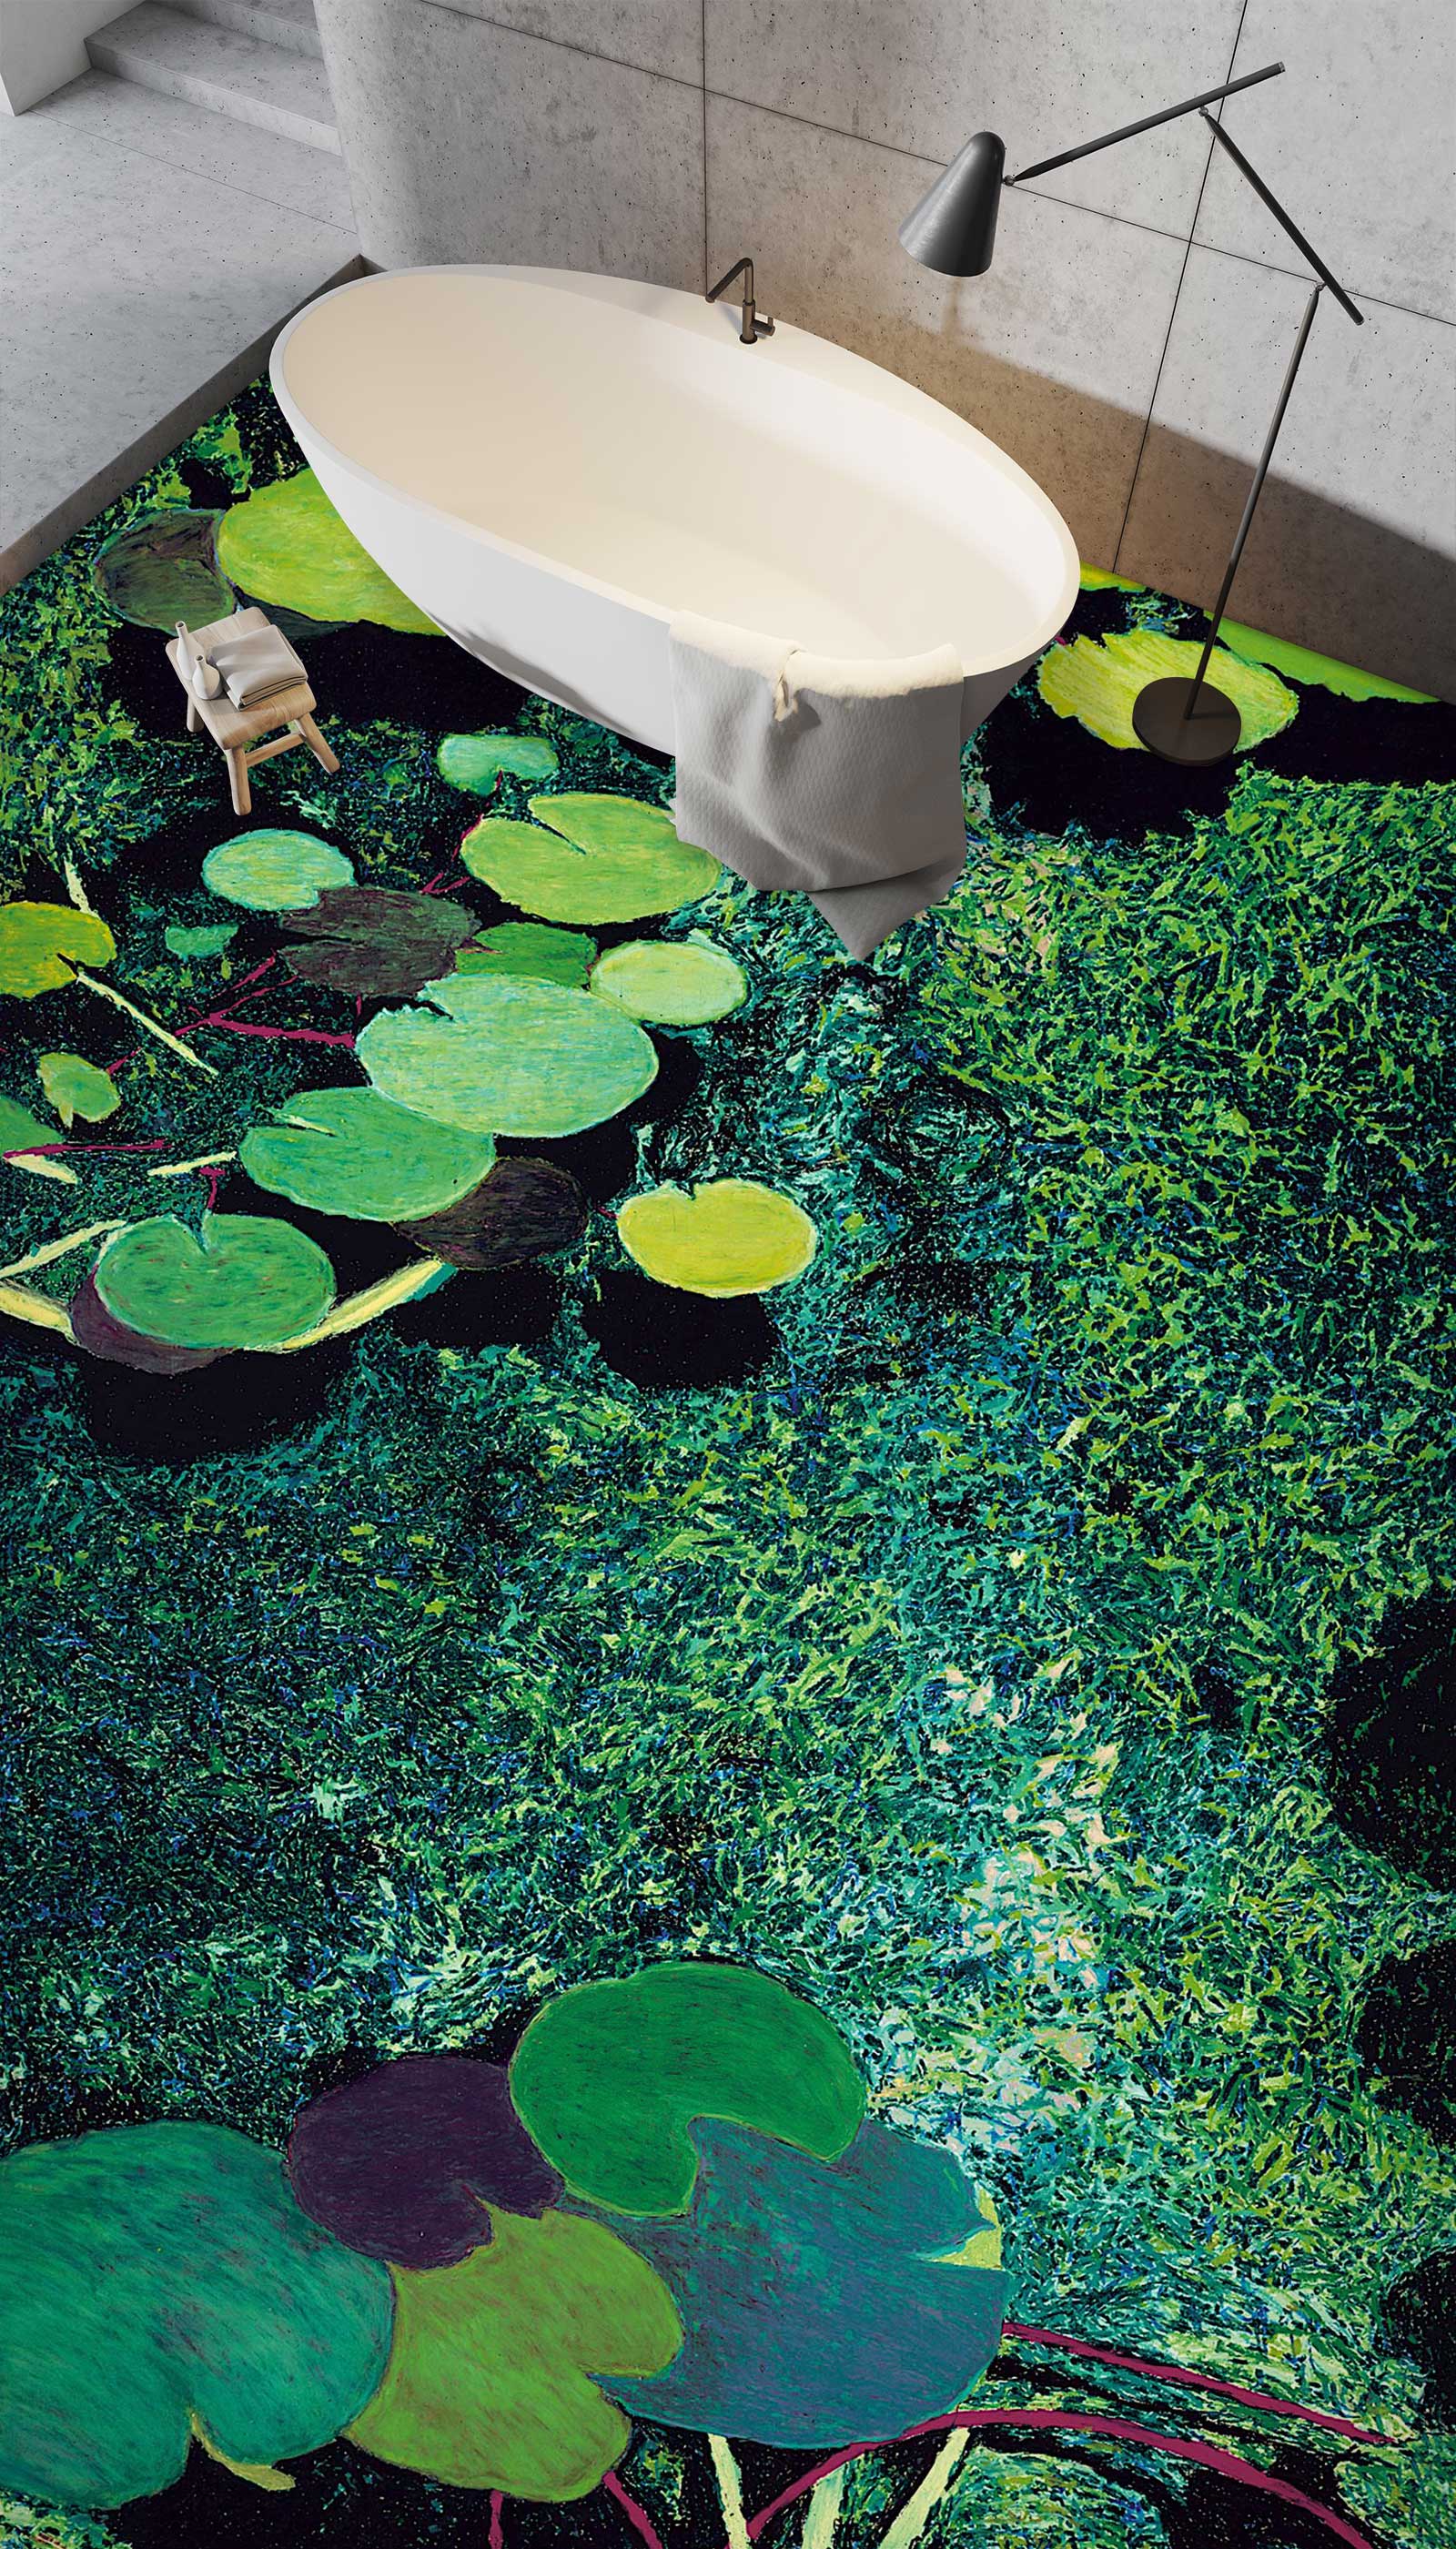 3D Green Lotus Pond 96120 Allan P. Friedlander Floor Mural  Wallpaper Murals Self-Adhesive Removable Print Epoxy